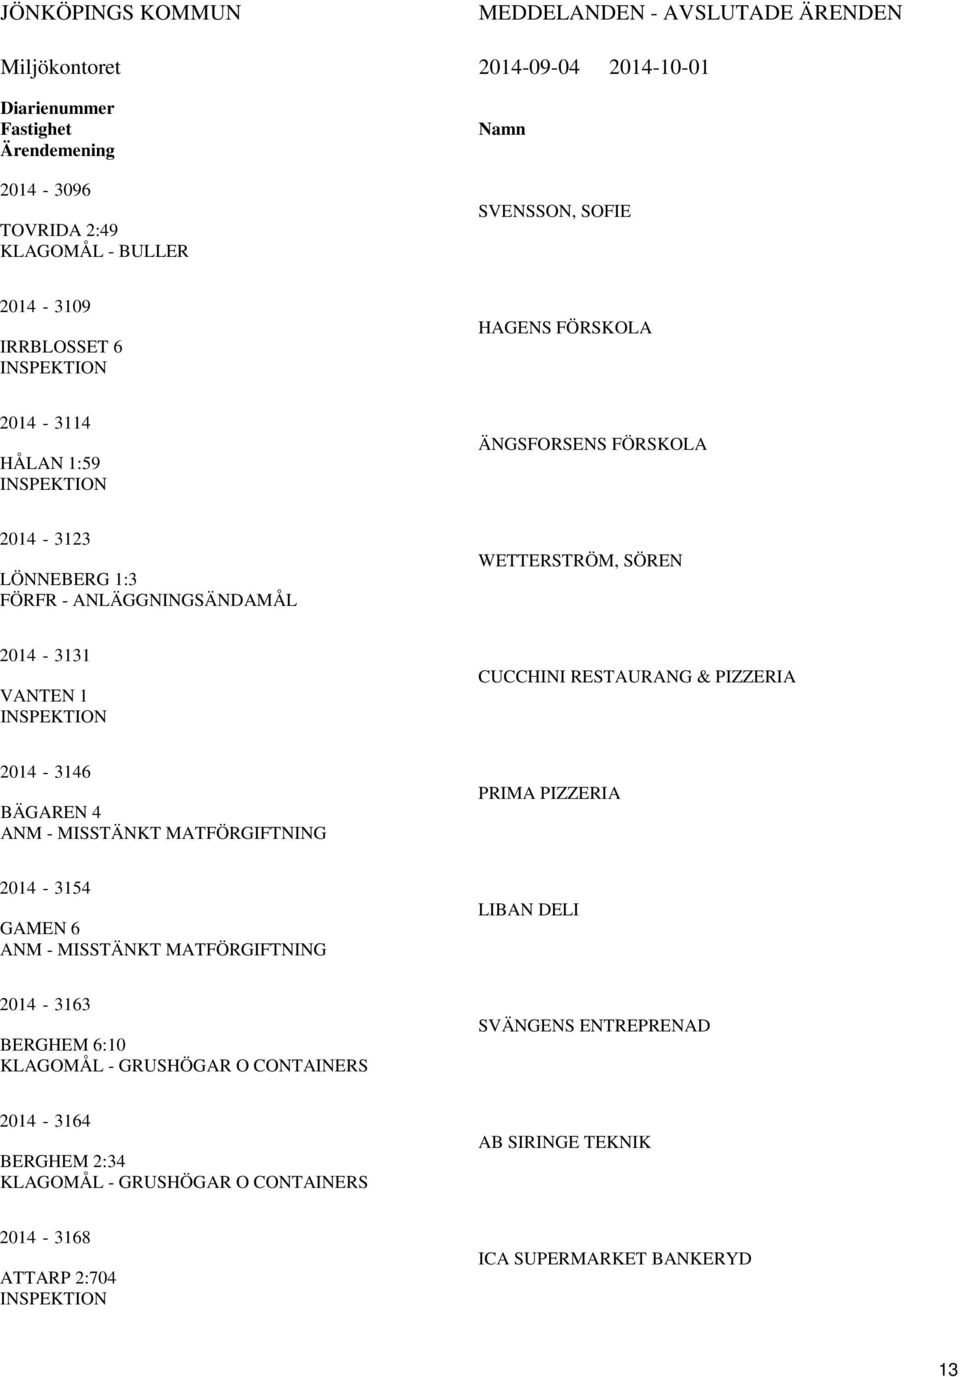 CUCCHINI RESTAURANG & PIZZERIA 2014-3146 BÄGAREN 4 ANM - MISSTÄNKT MATFÖRGIFTNING PRIMA PIZZERIA 2014-3154 GAMEN 6 ANM - MISSTÄNKT MATFÖRGIFTNING LIBAN DELI 2014-3163 BERGHEM